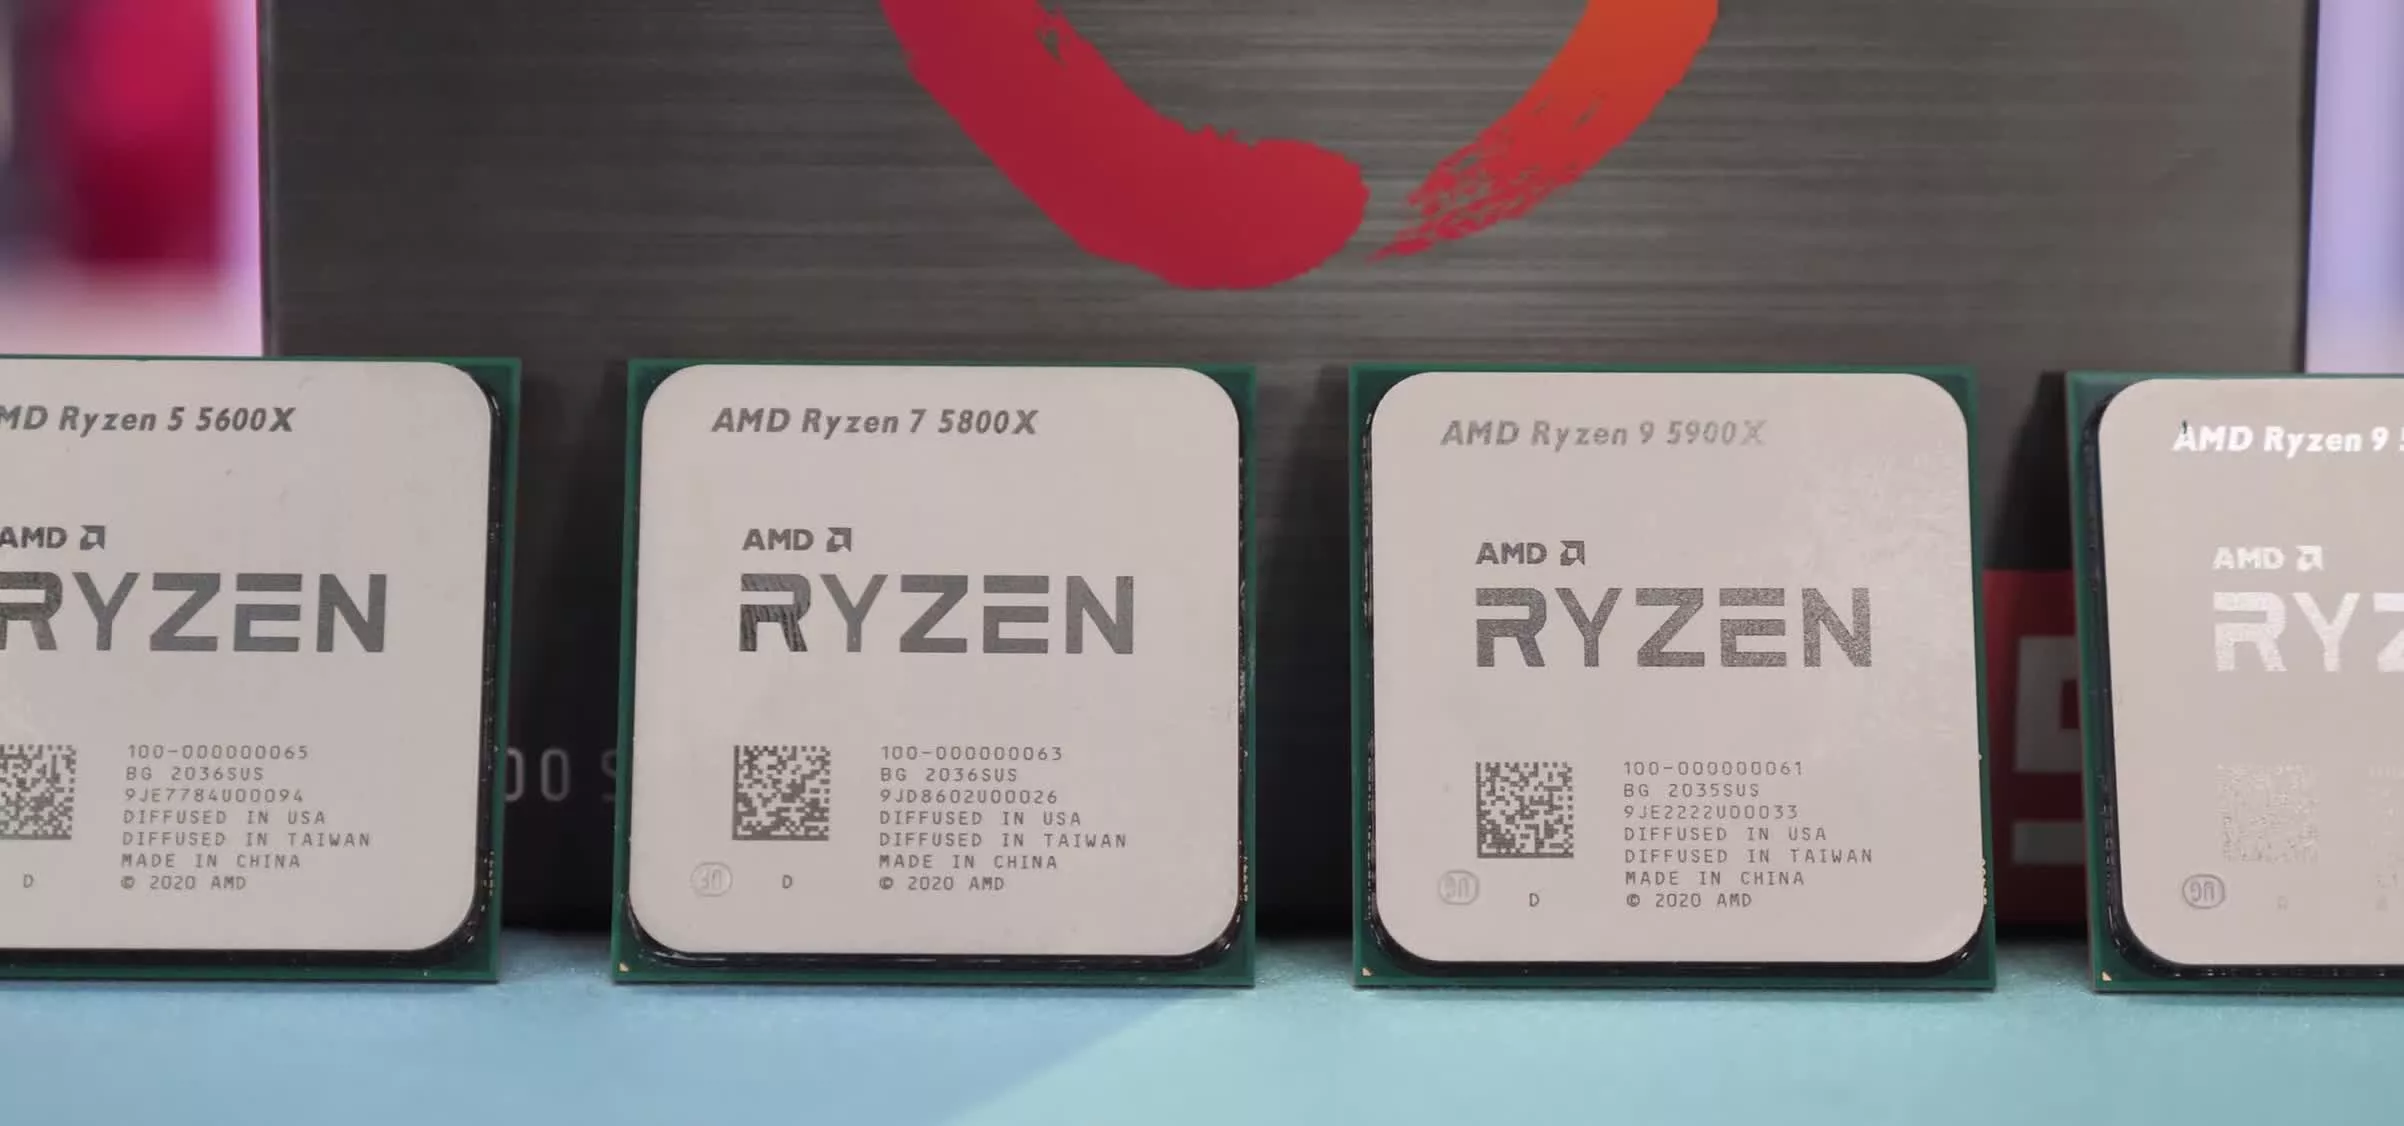 Ryzen 5 5600X vs Ryzen 7 5800X